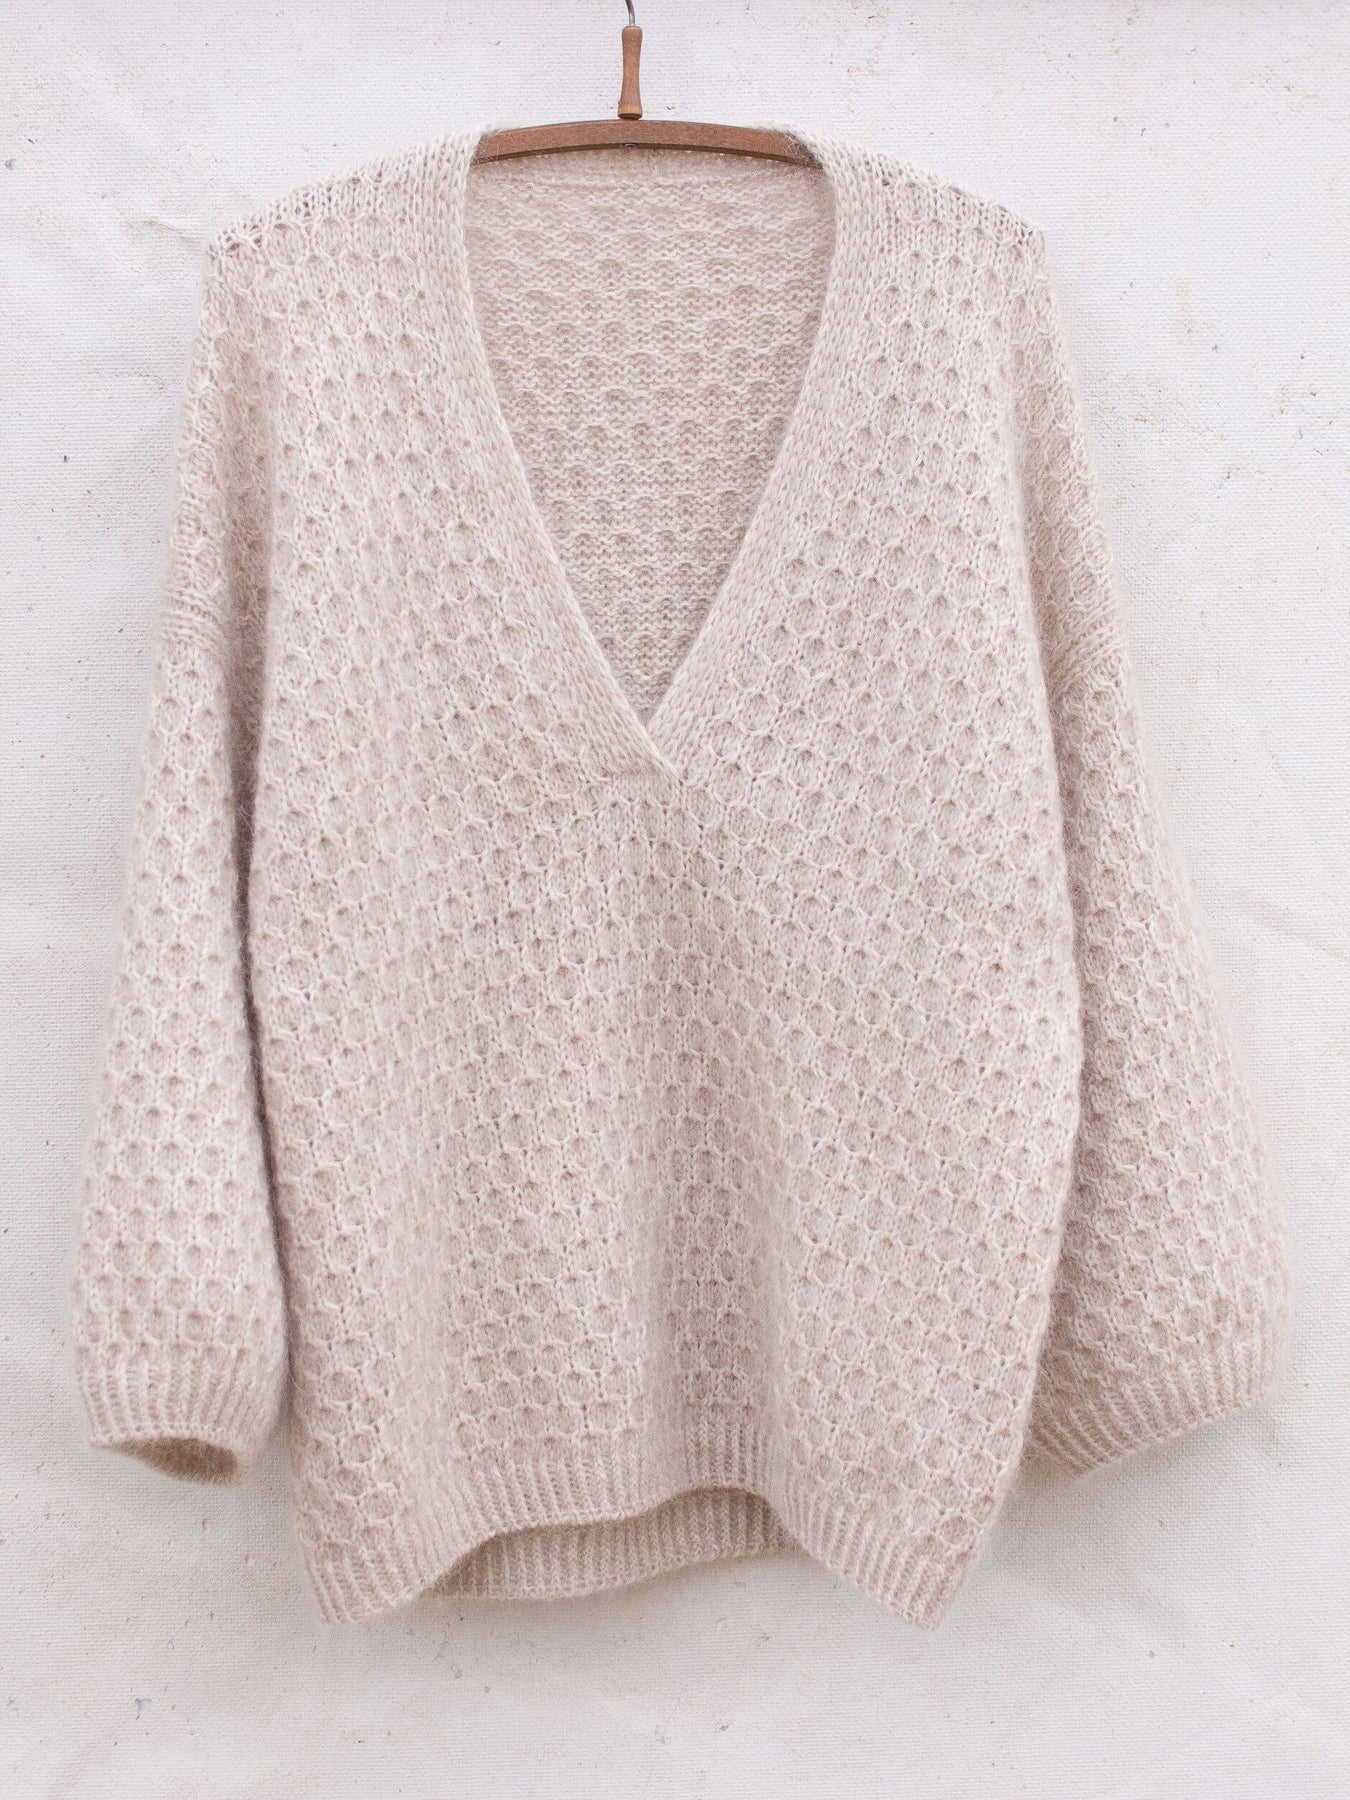 Cardi V-neck sweater by Anne Ventzel, No 2 + Silk mohair yarn kit (ex